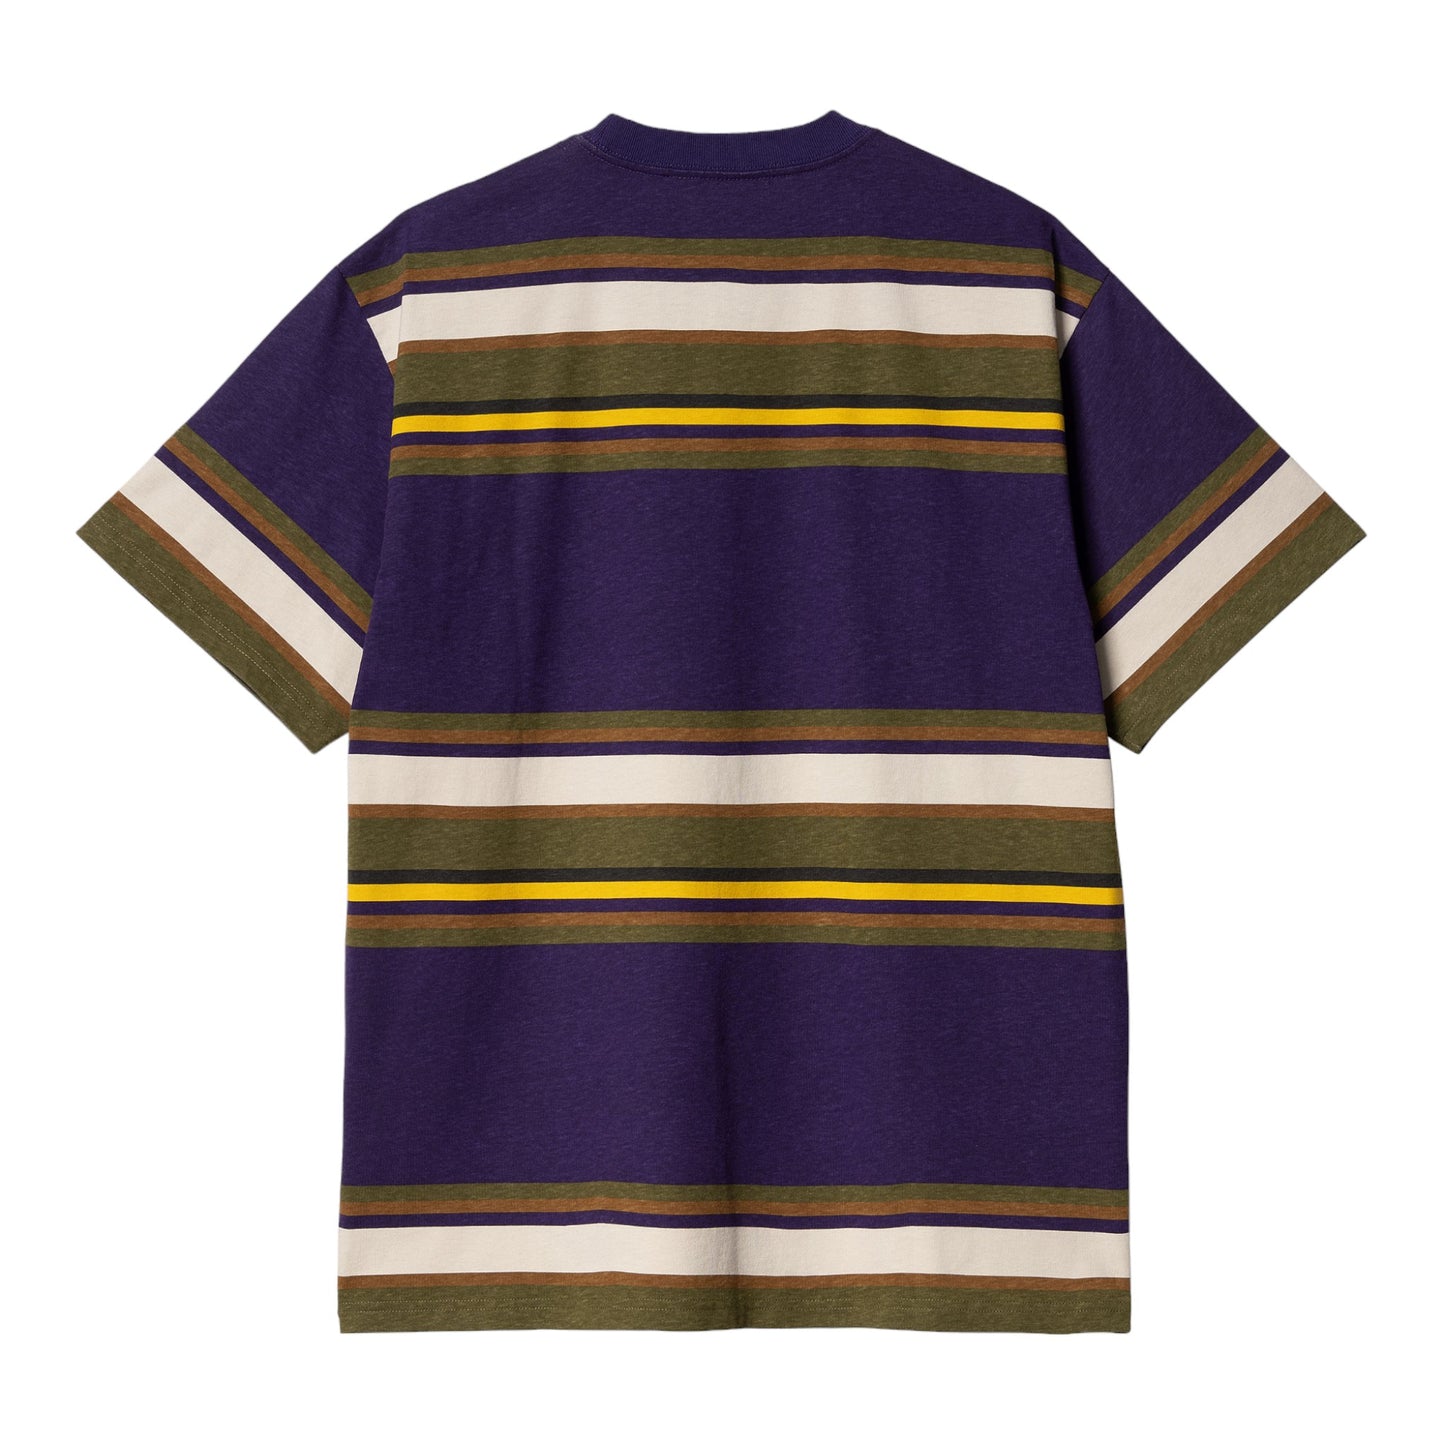 Carhartt Wip Morcom T-Shirt - Morcom Stripe, Tyrian heavy stone wash